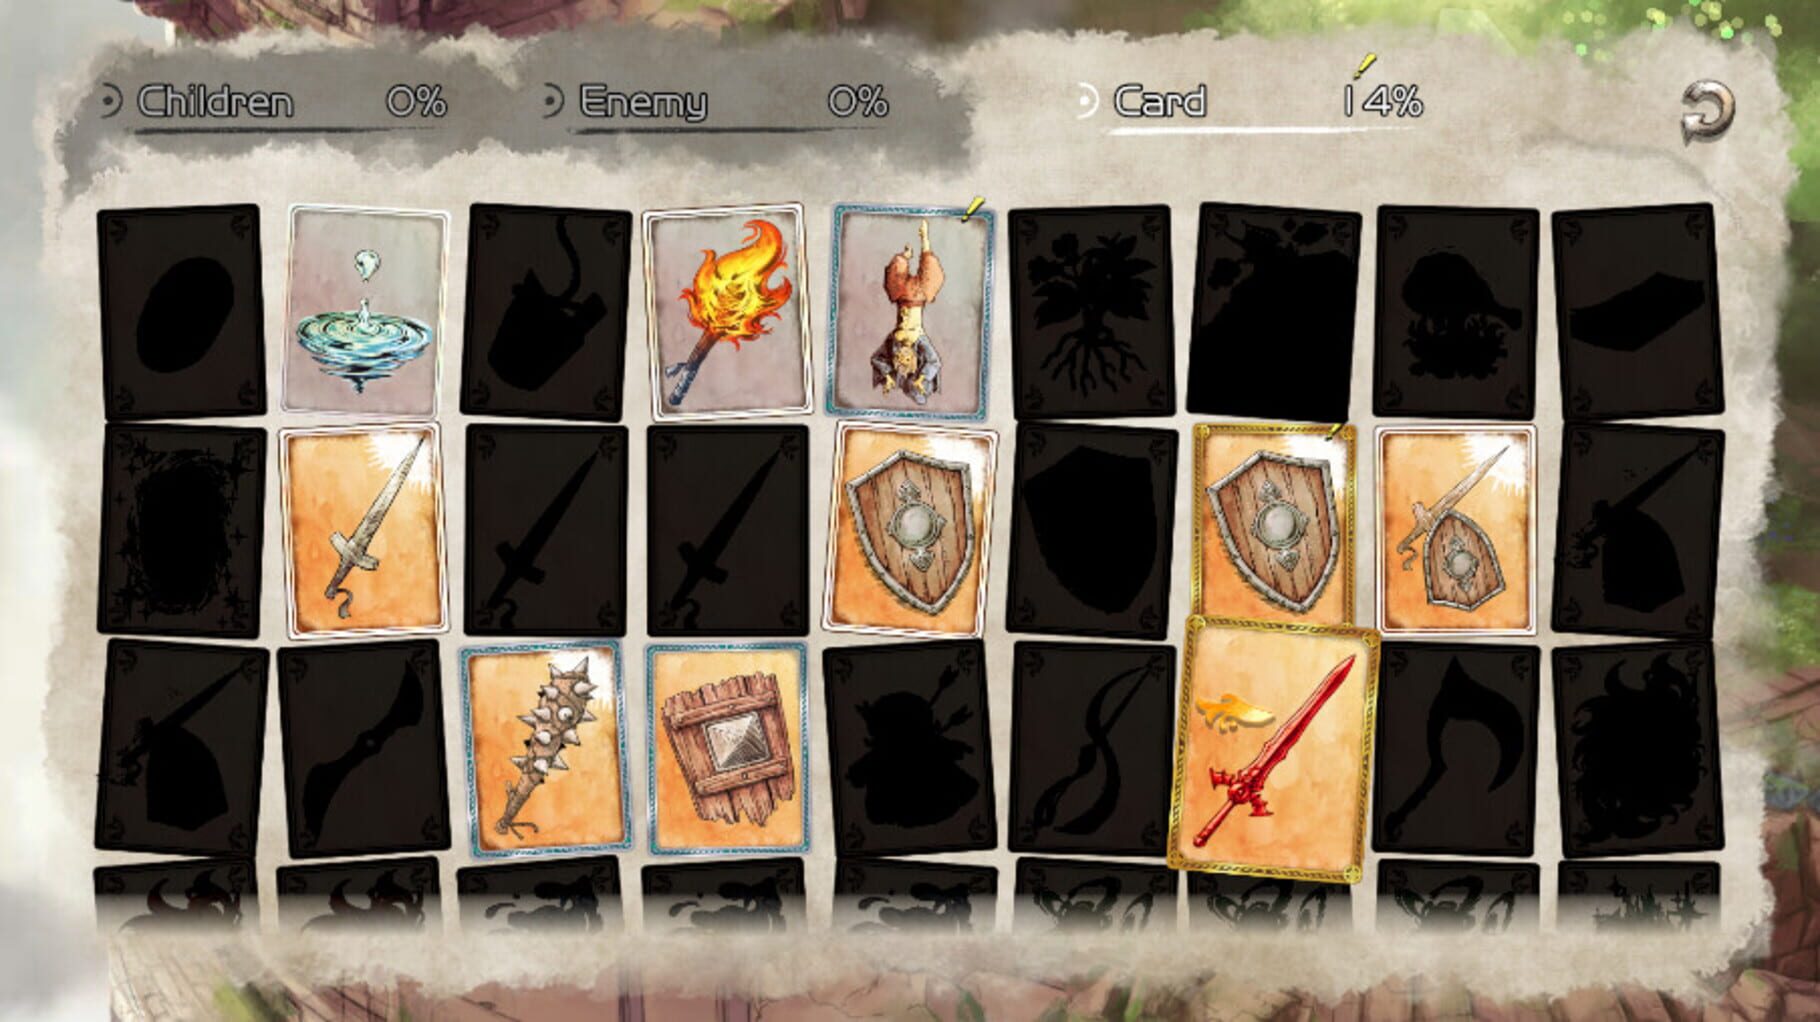 Arcana of Paradise: The Tower screenshot